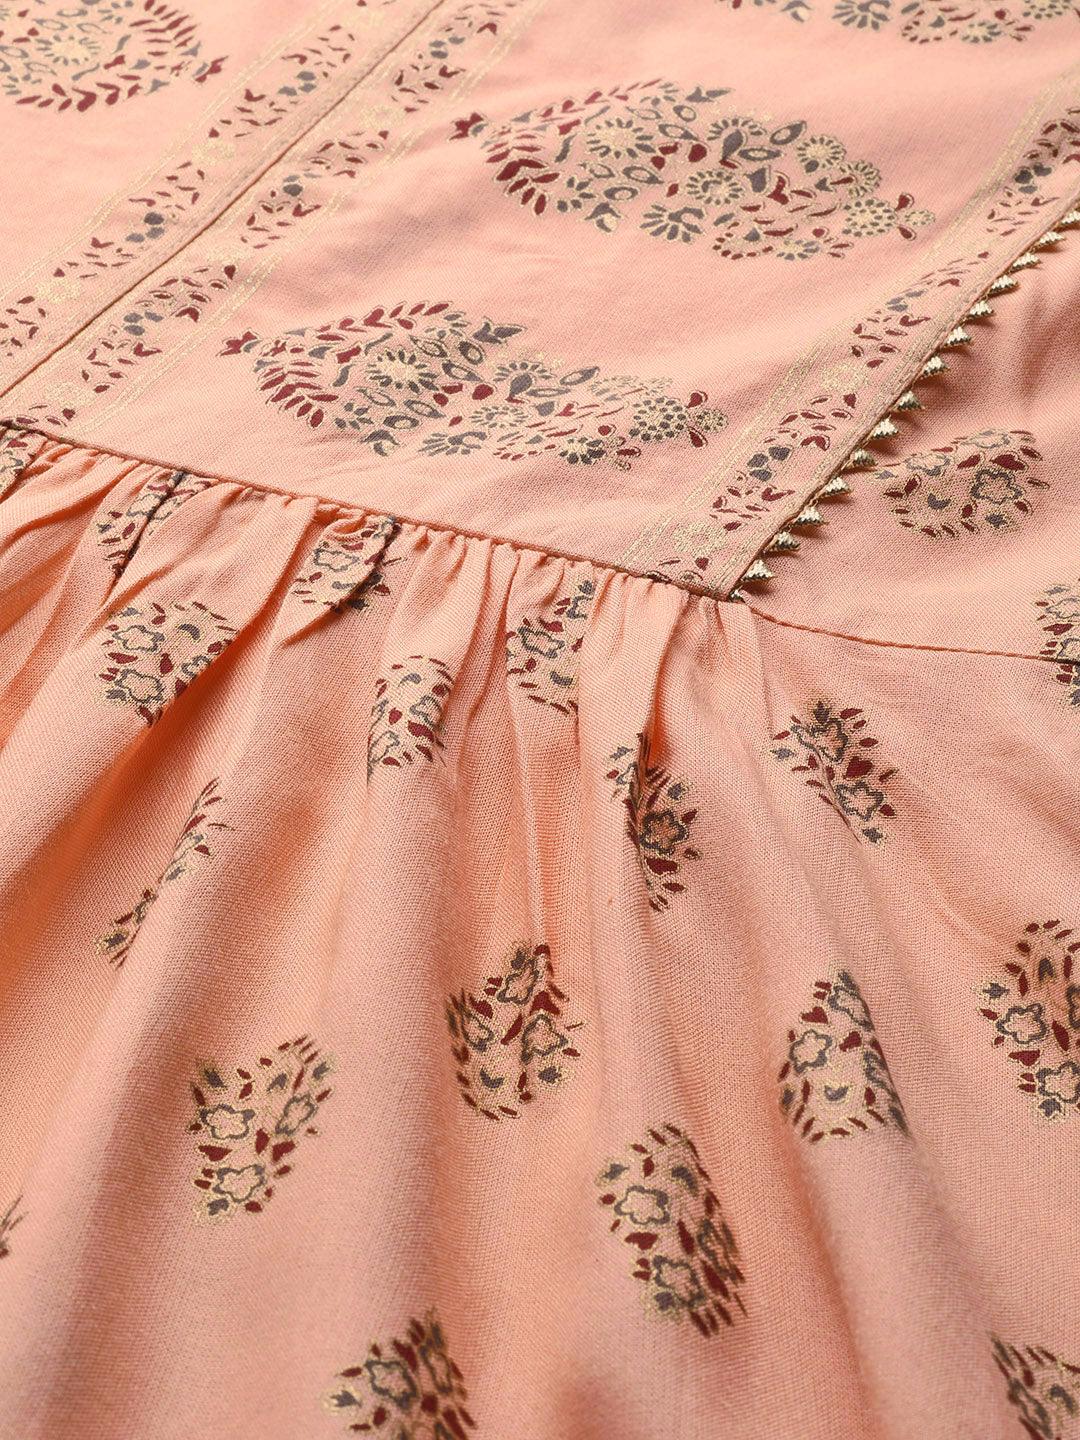 Peach Printed Viscose Rayon Dress - Libas